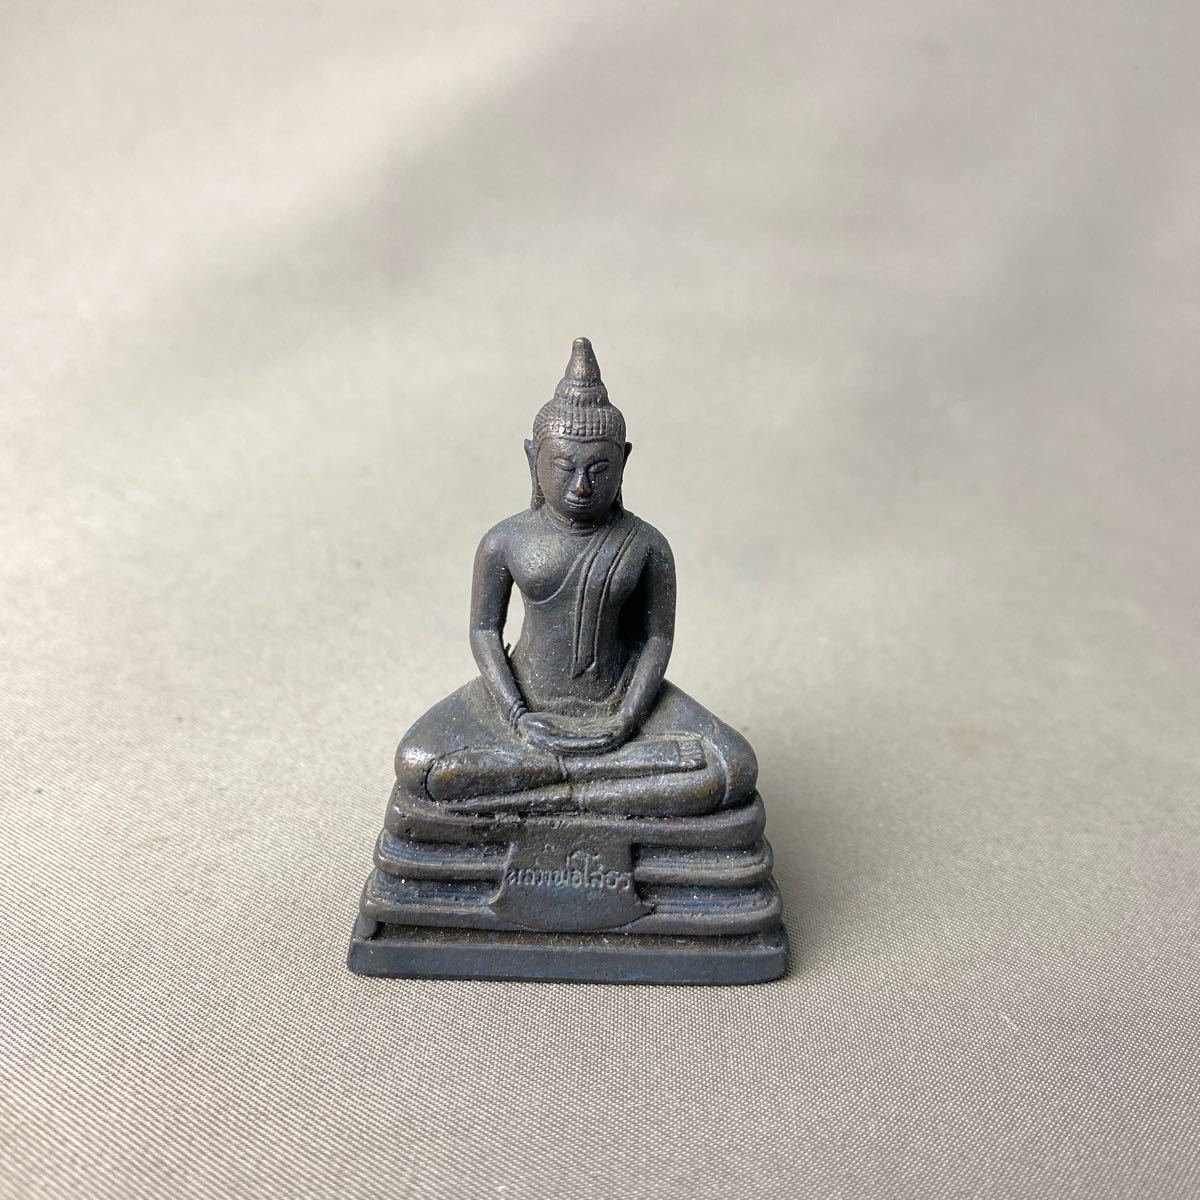 K288 Buddhism fine art chi bed Buddhist image old copper seat image miniature mongoru